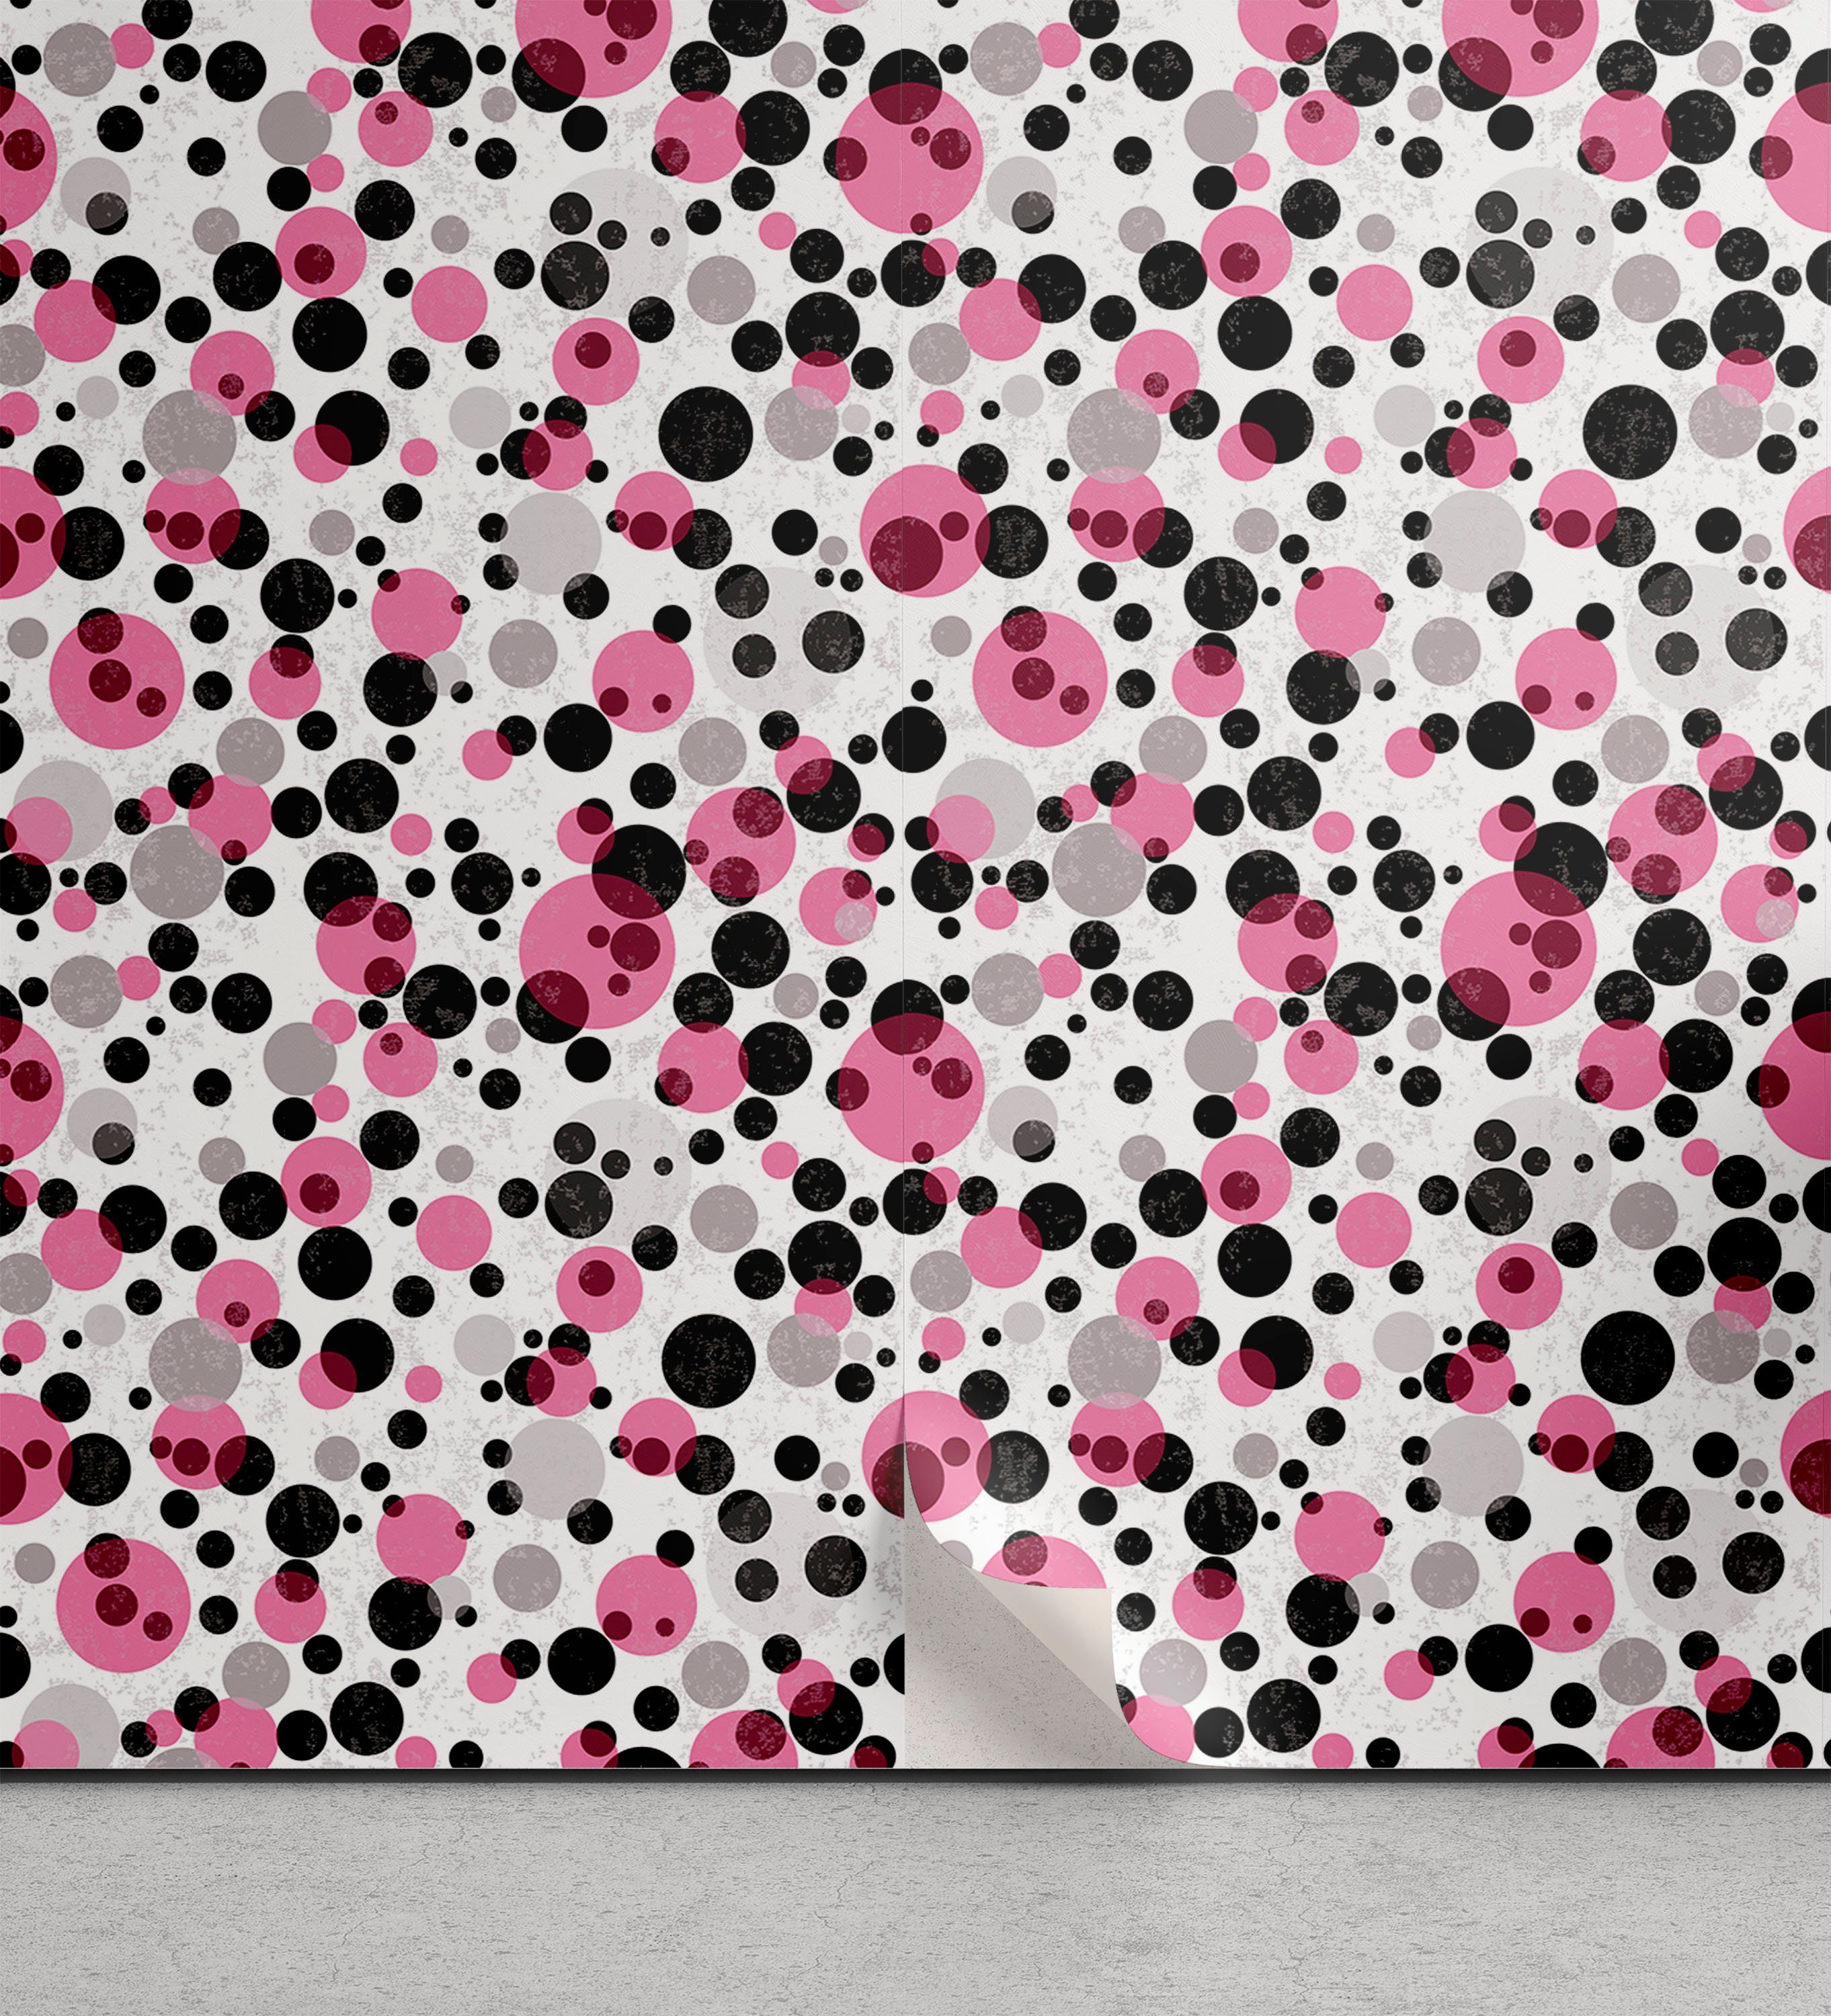 Abakuhaus Vinyltapete selbstklebendes Wohnzimmer Küchenakzent, Retro Grunge Spotty Muster